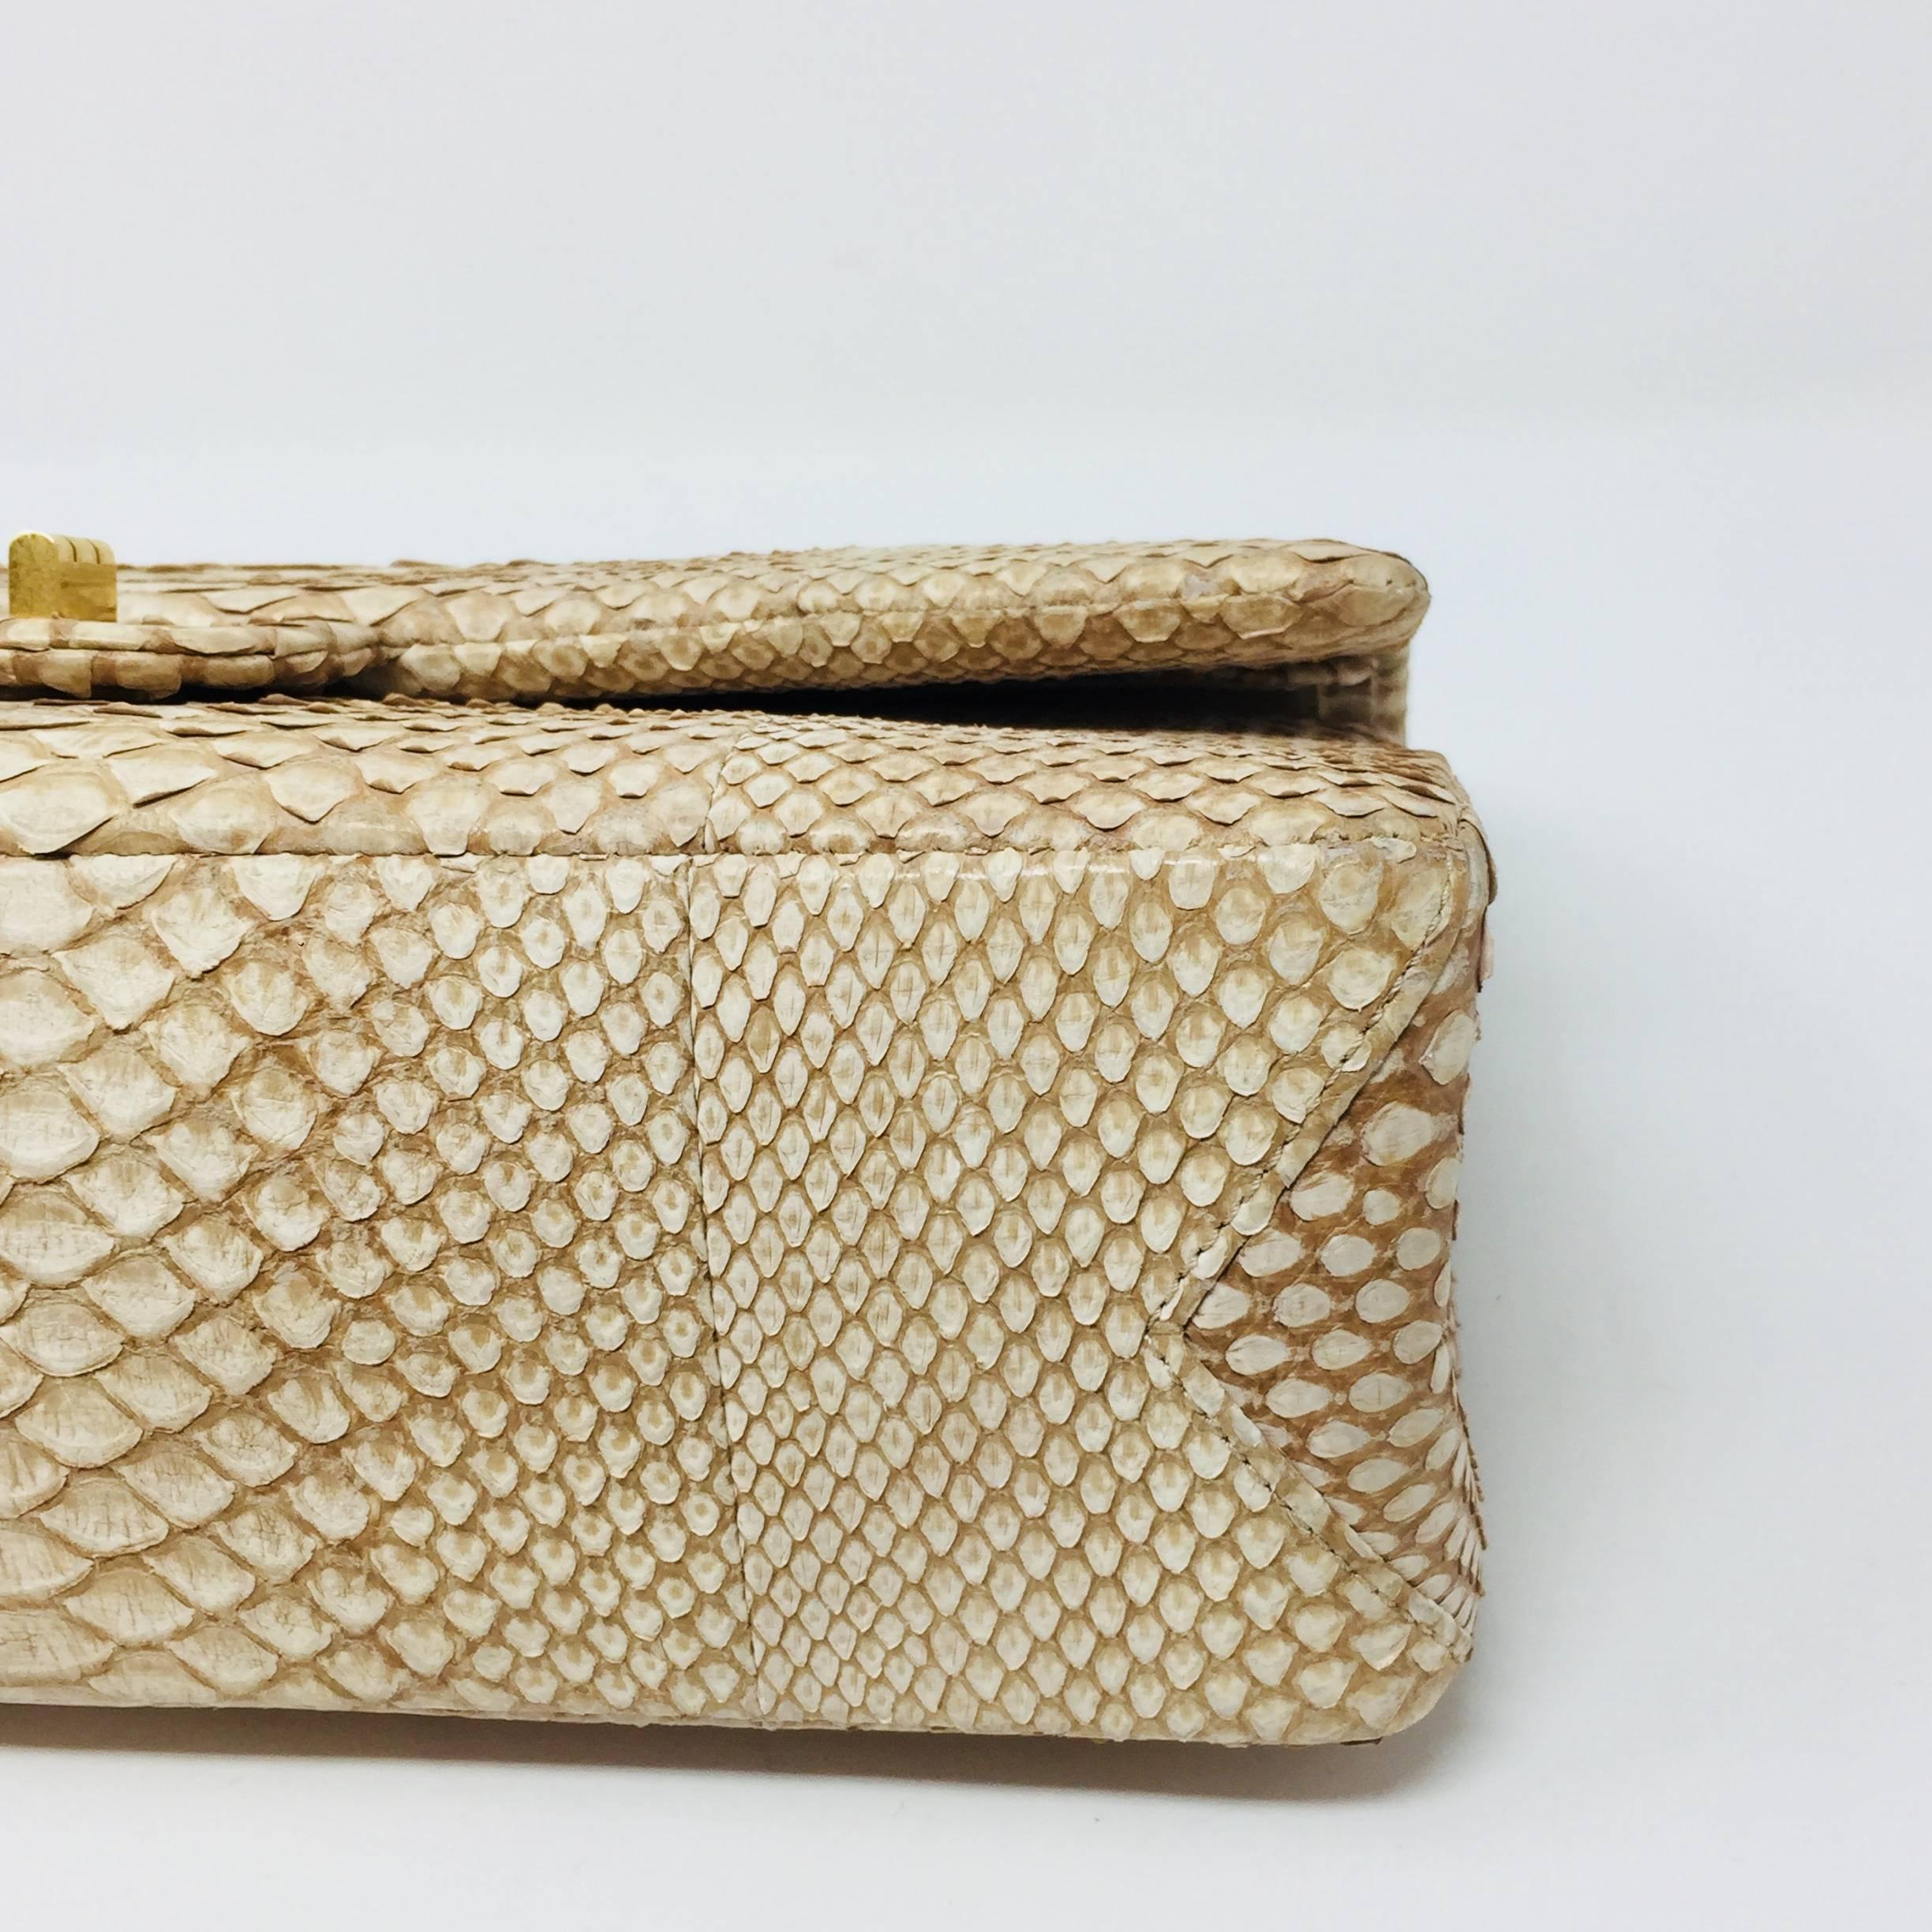 Chanel Reissue 2.55 Gold Nude Python Exotic Leather Shoulder Bag 6